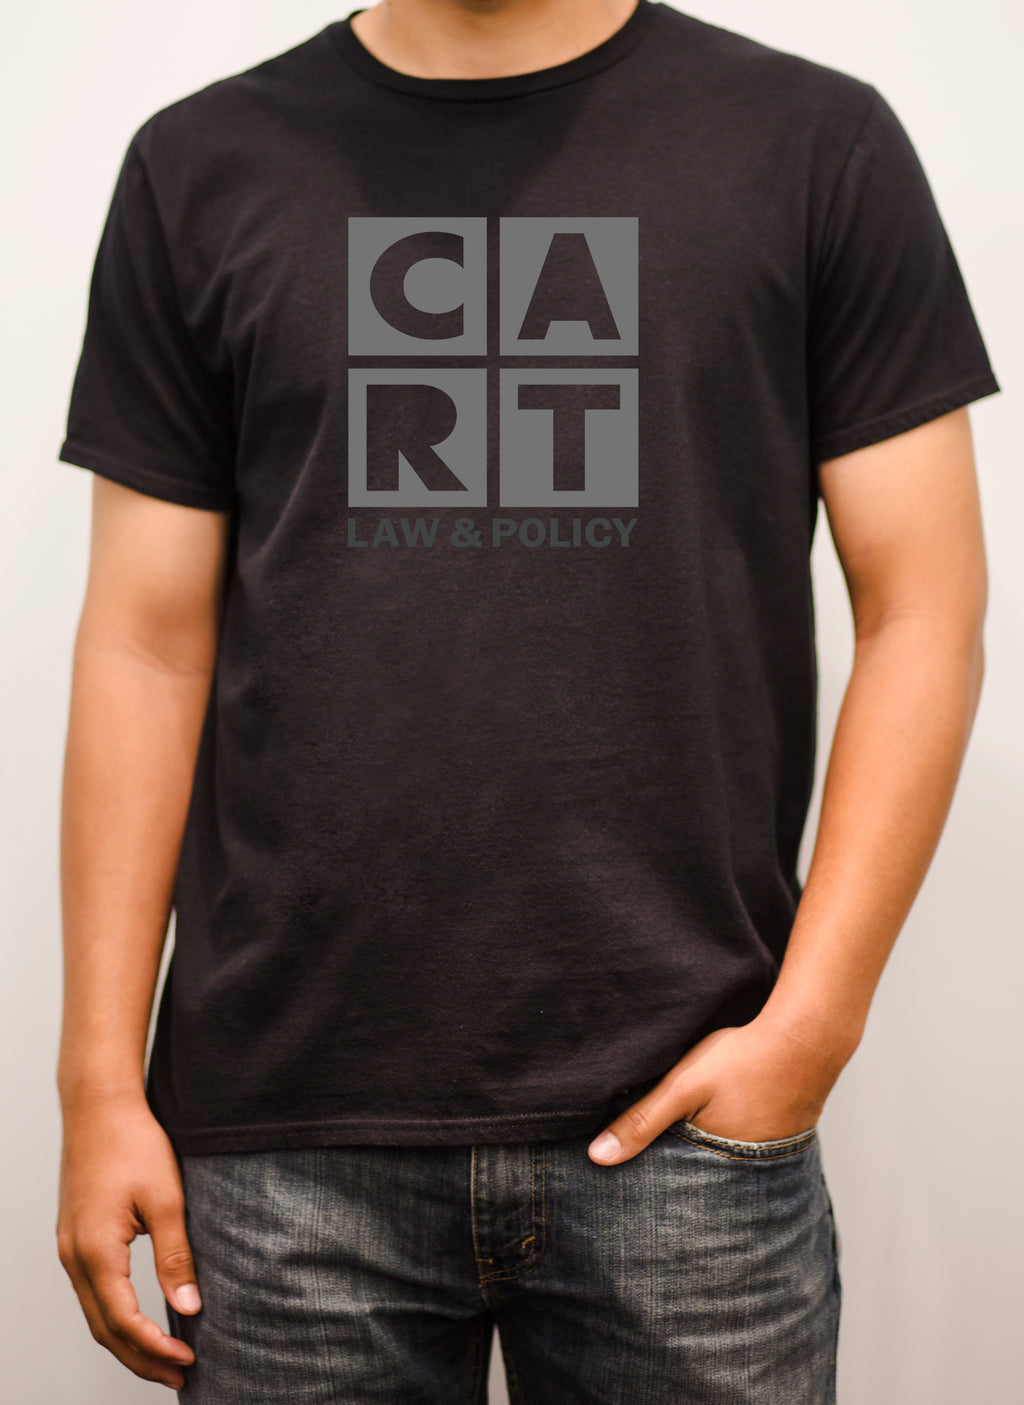 Short sleeve t-shirt (Unisex fit) - Law & Policy black/grey logo